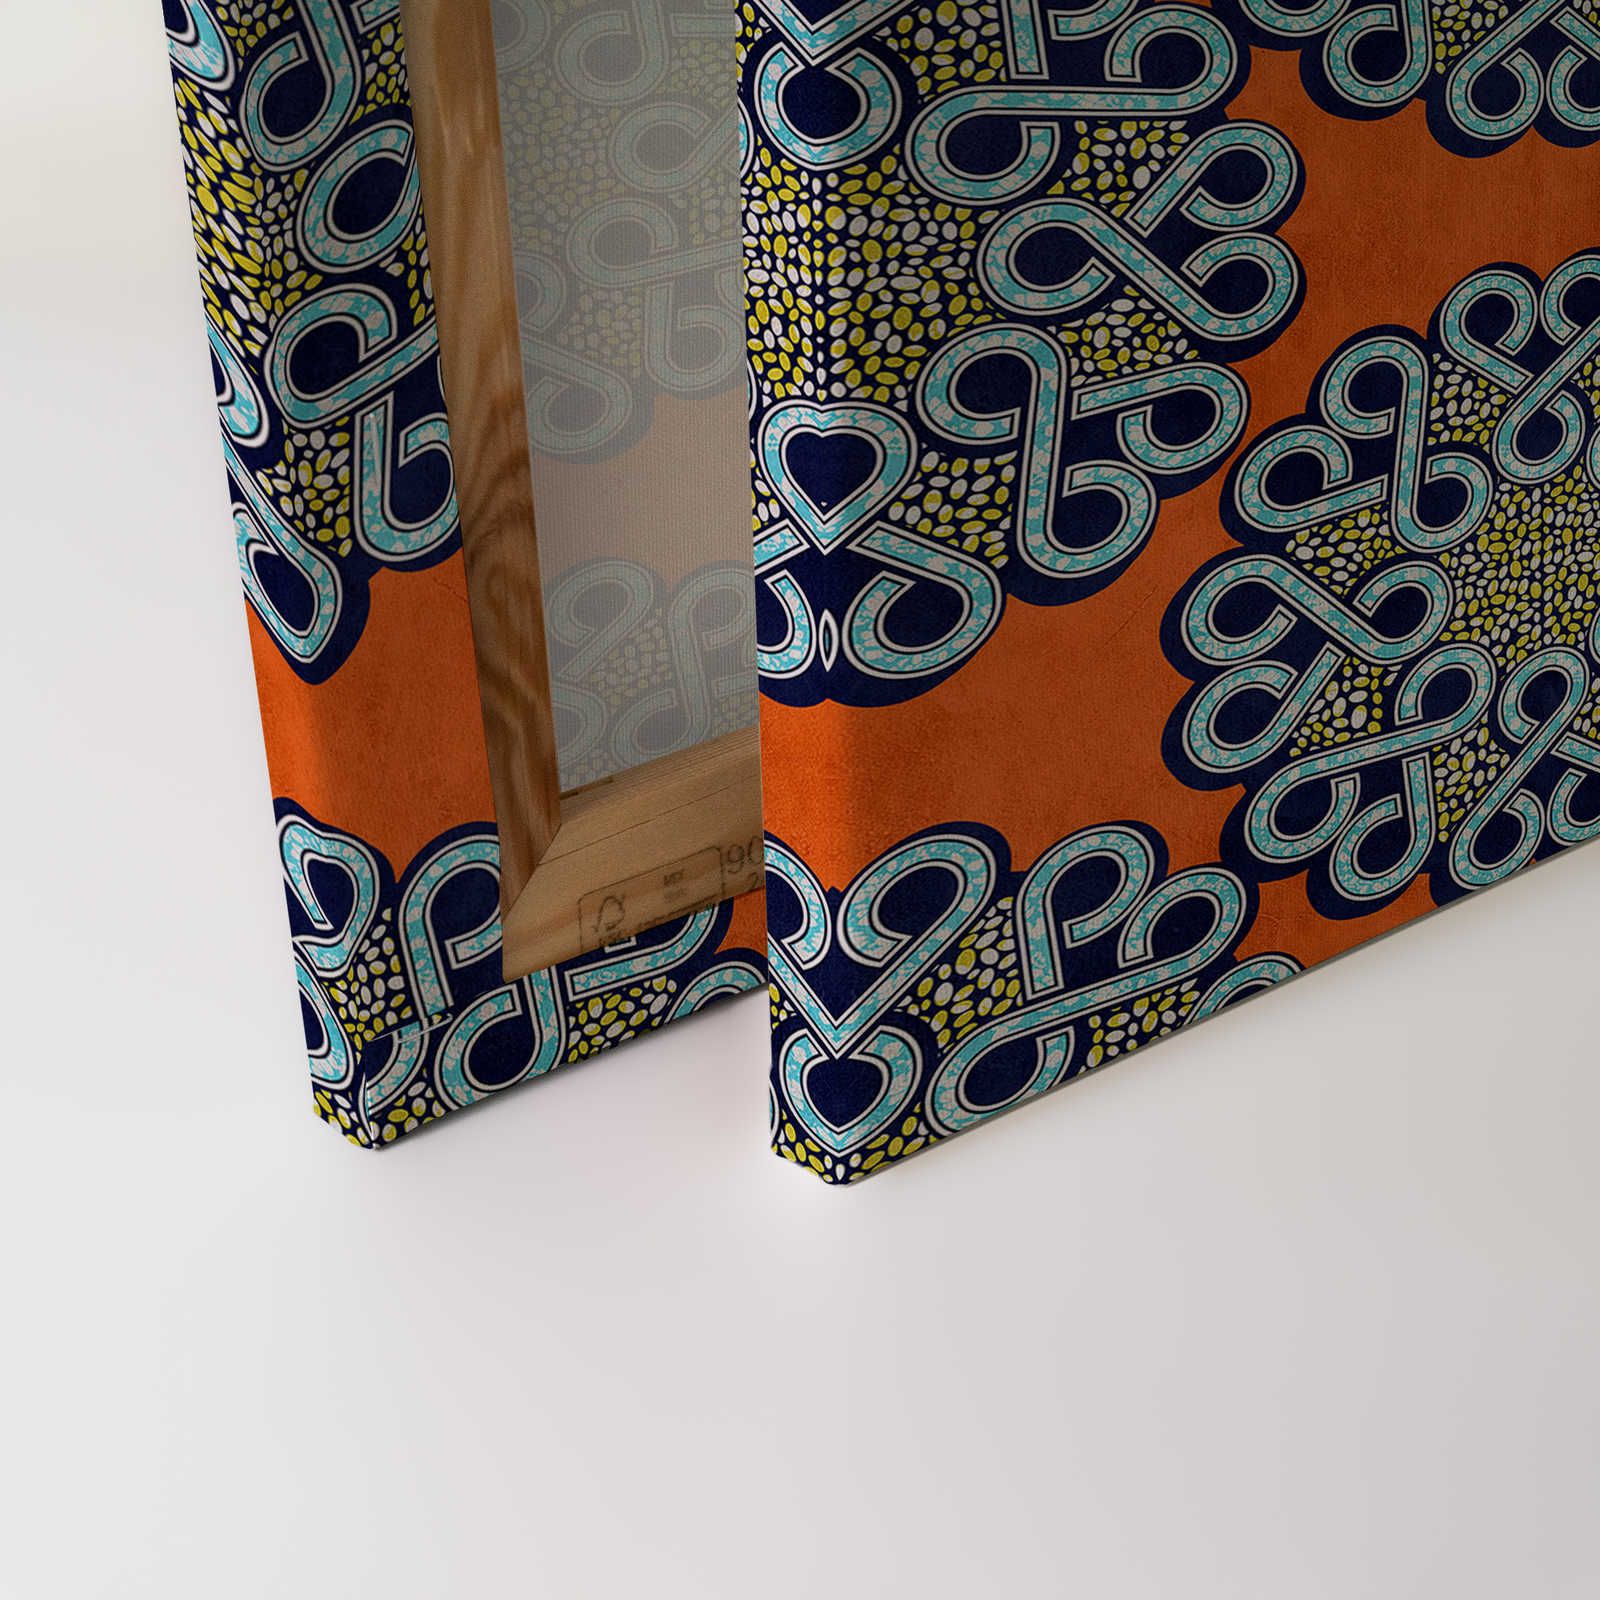             Dakar 2 - Aftican Canvas Wax Textile Pattern Orange, Blue - 0.90 m x 0.60 m
        